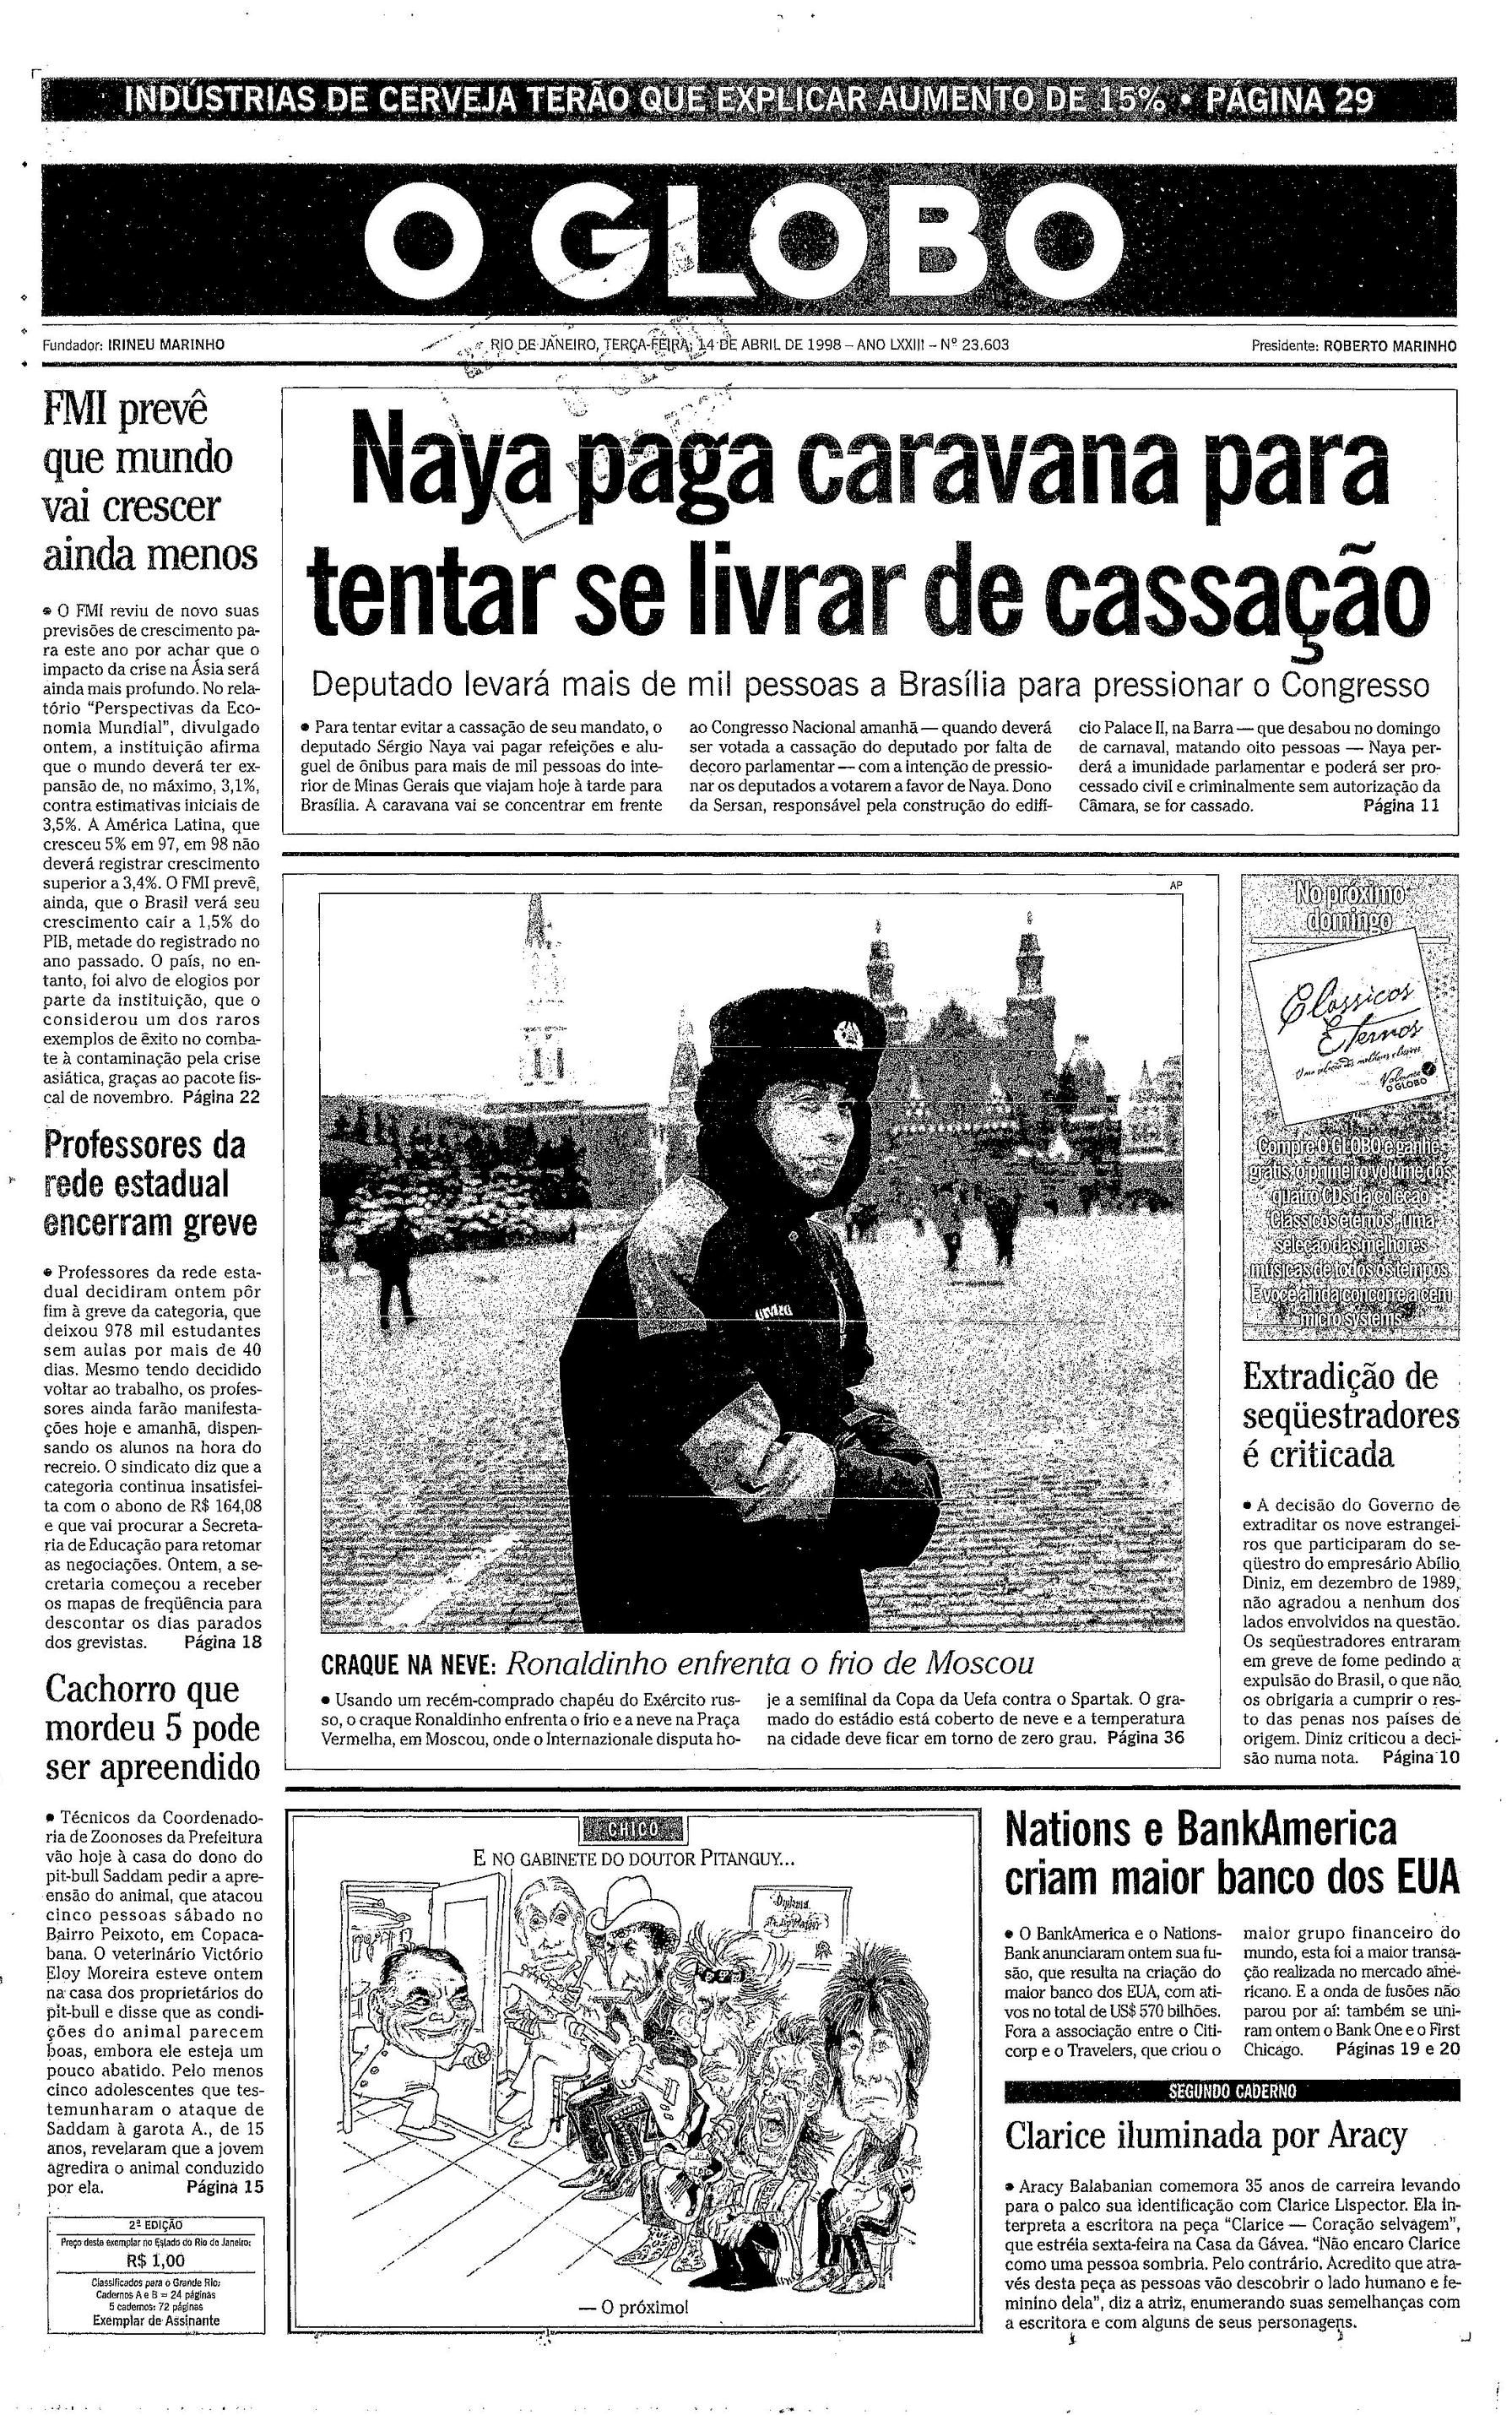 o globo 14 april 1998 supplement Bob Dylan front cover